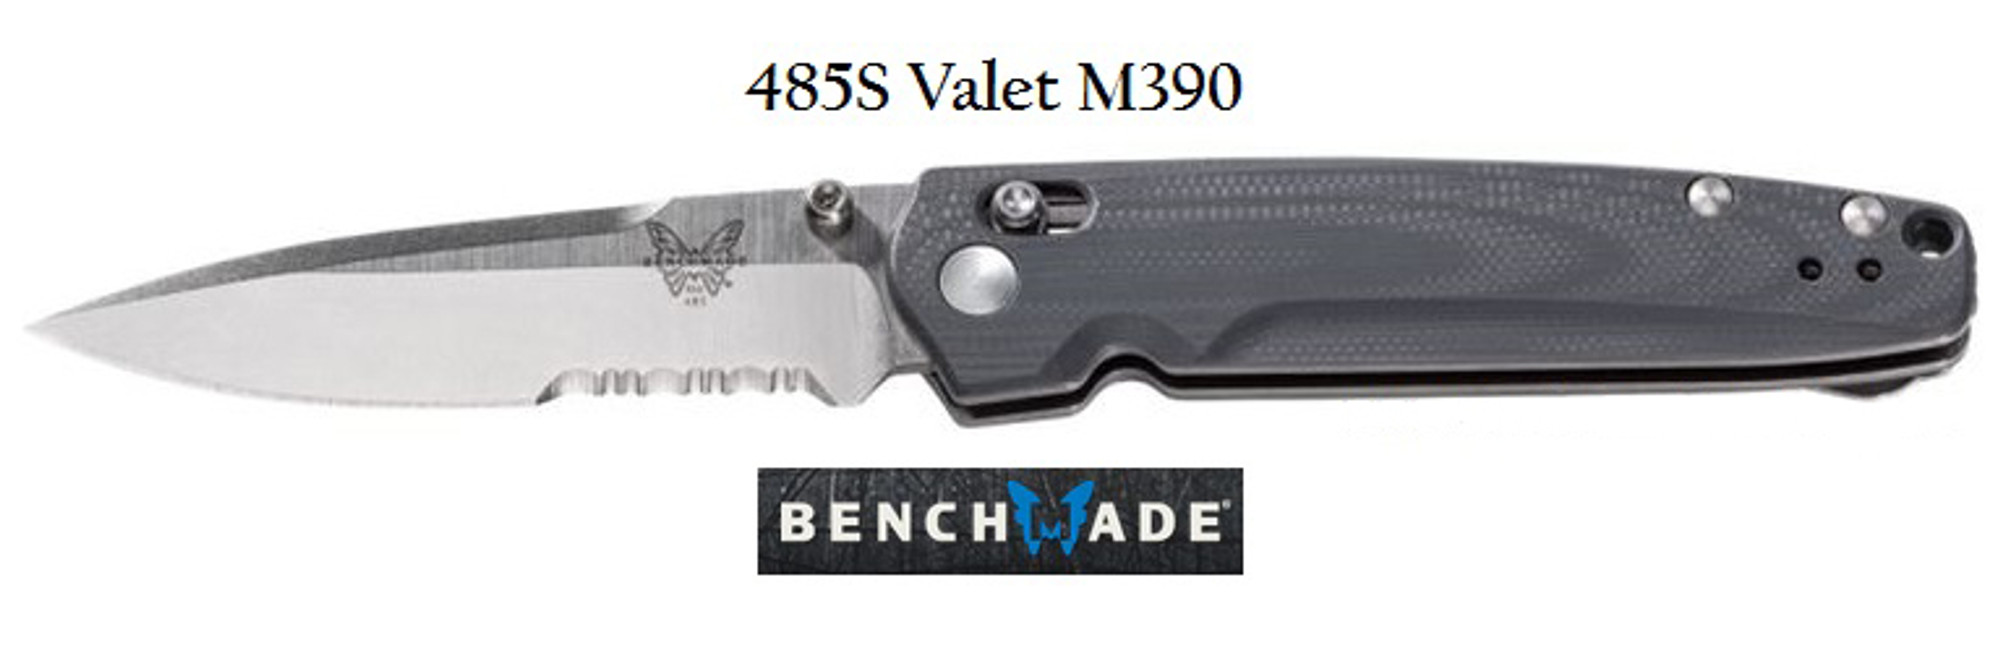 Benchmade 485S Valet Folder w/Serration M390